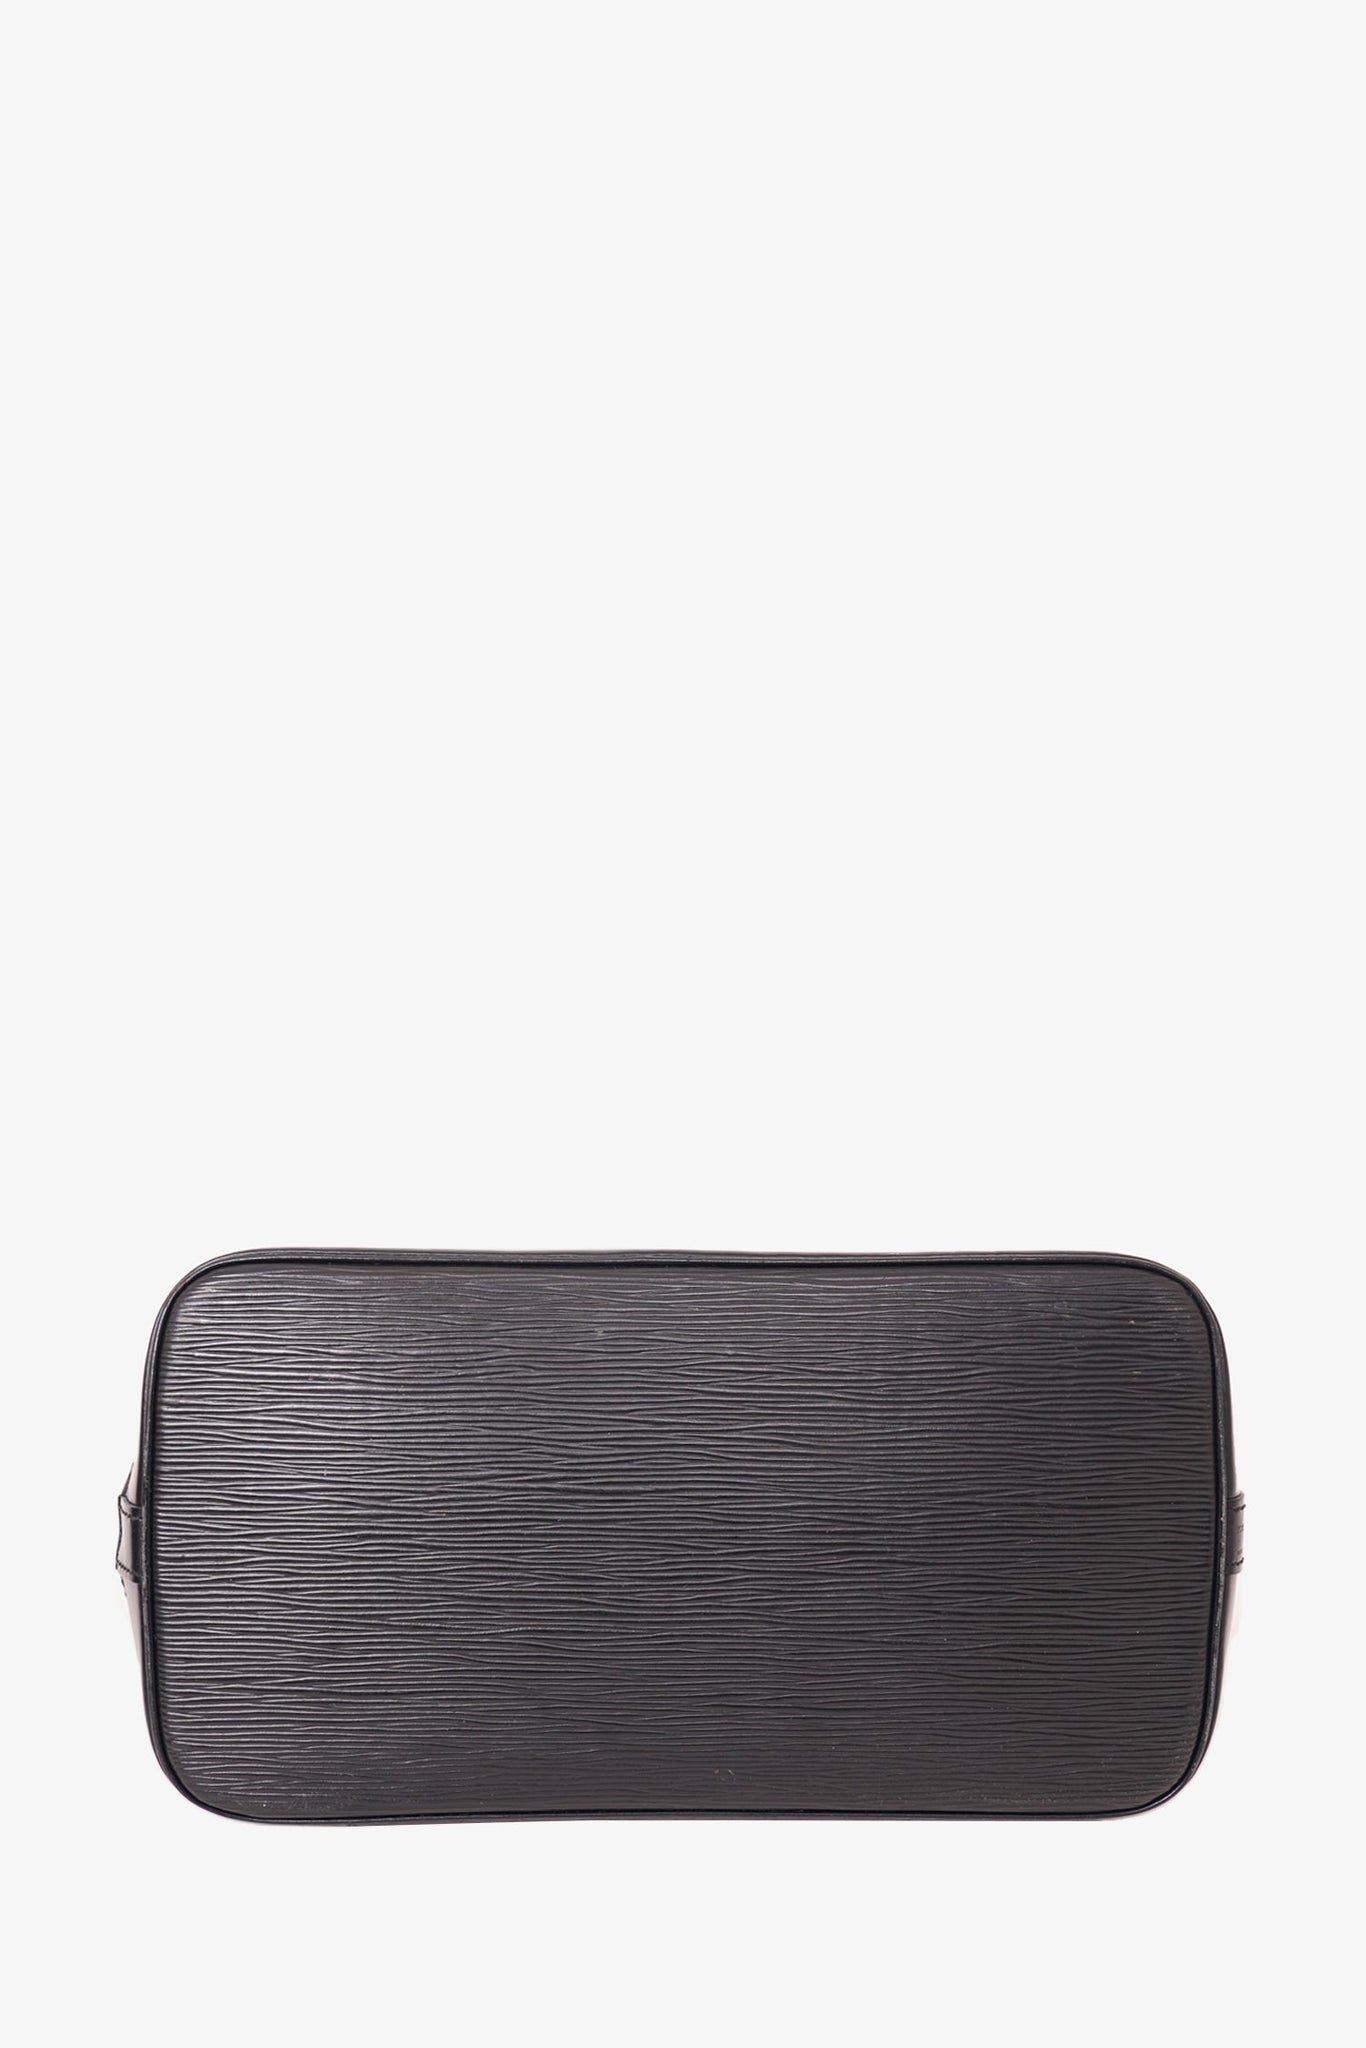 Louis Vuitton Black Epi PM "Alma" Top Handle